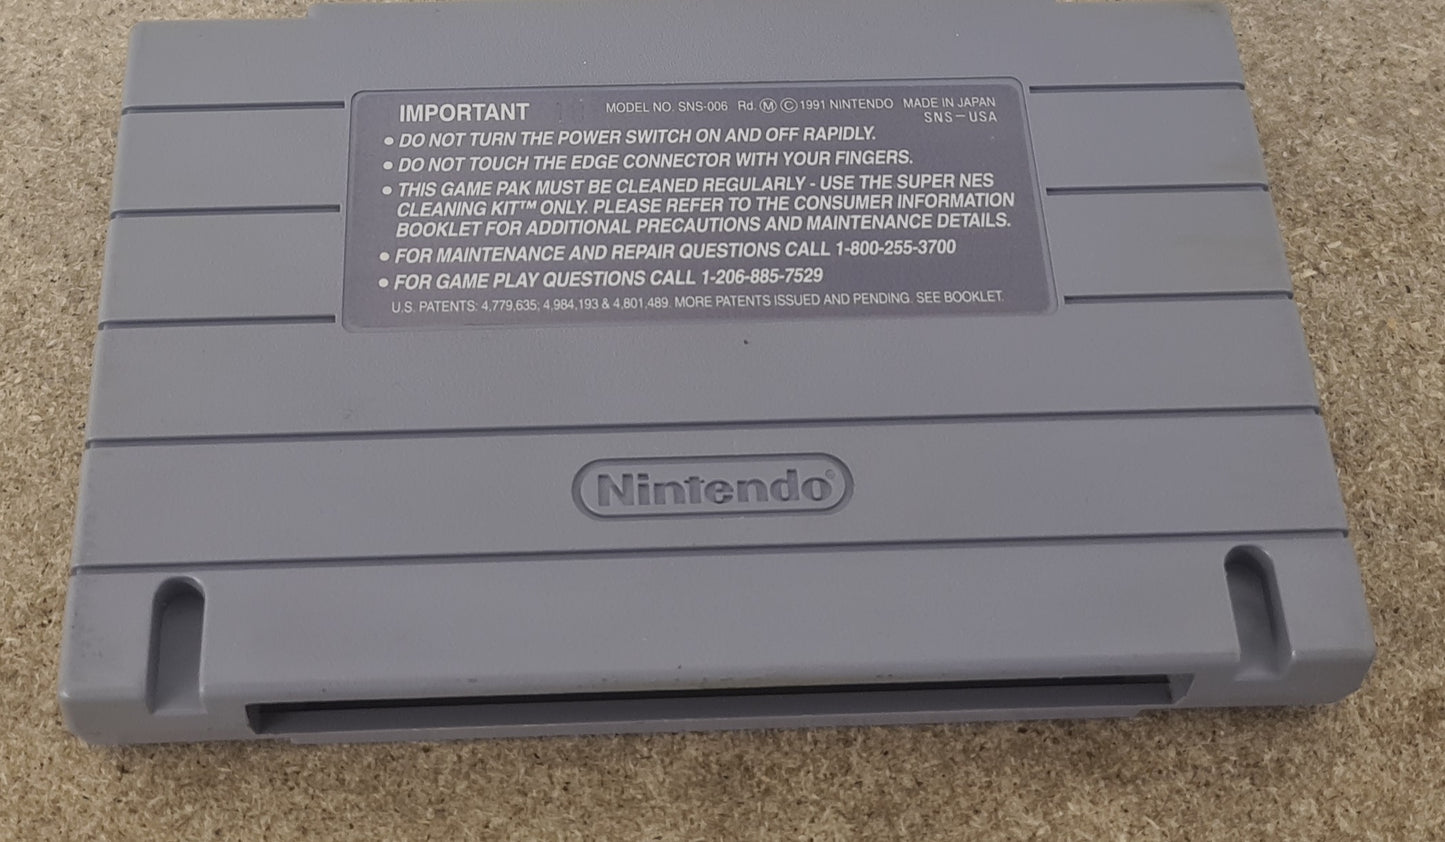 Paperboy 2 Super Nintendo Entertainment System (SNES) NTSC U/C Game Cartridge Only